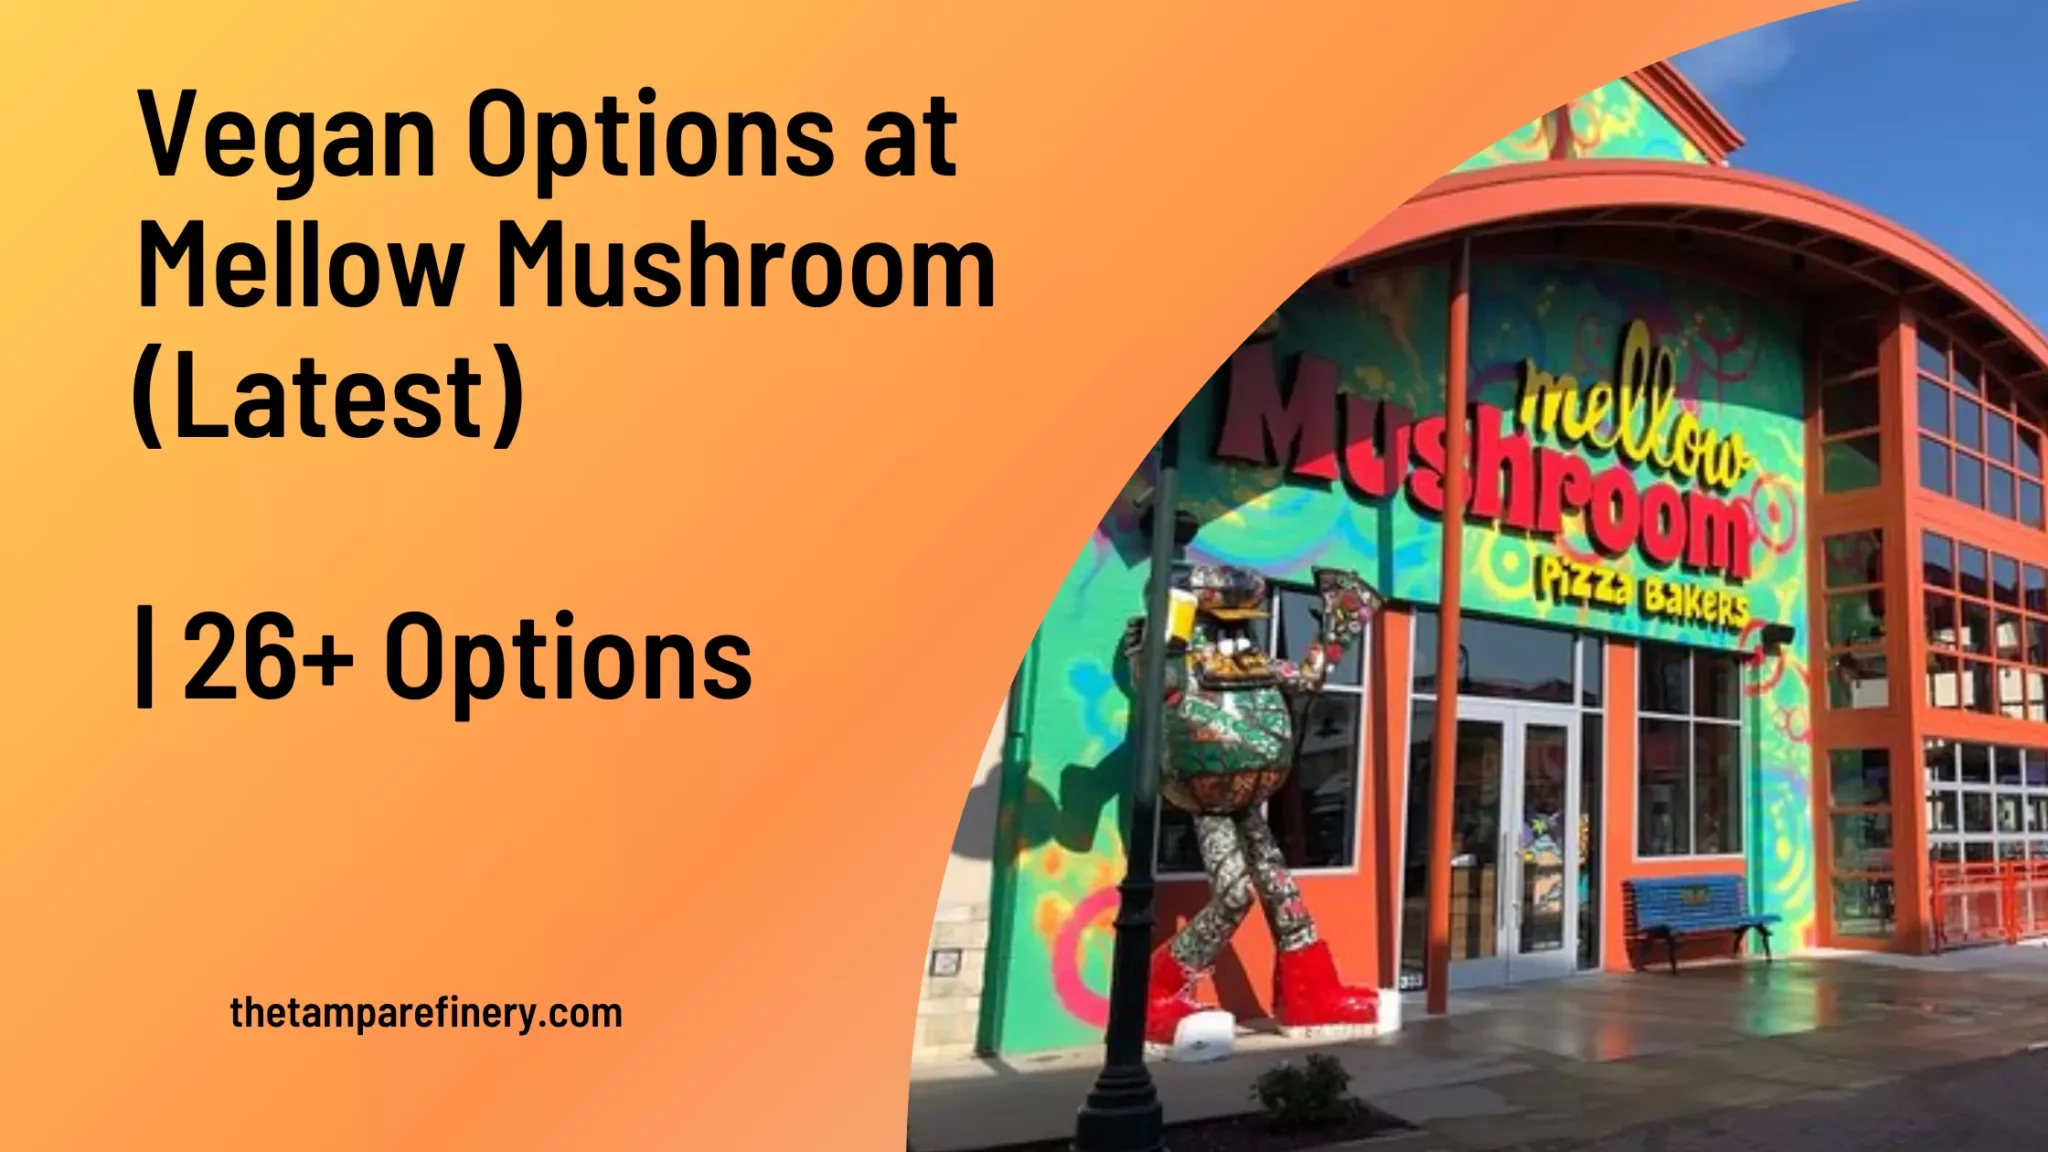 Vegan Options at Mellow Mushroom